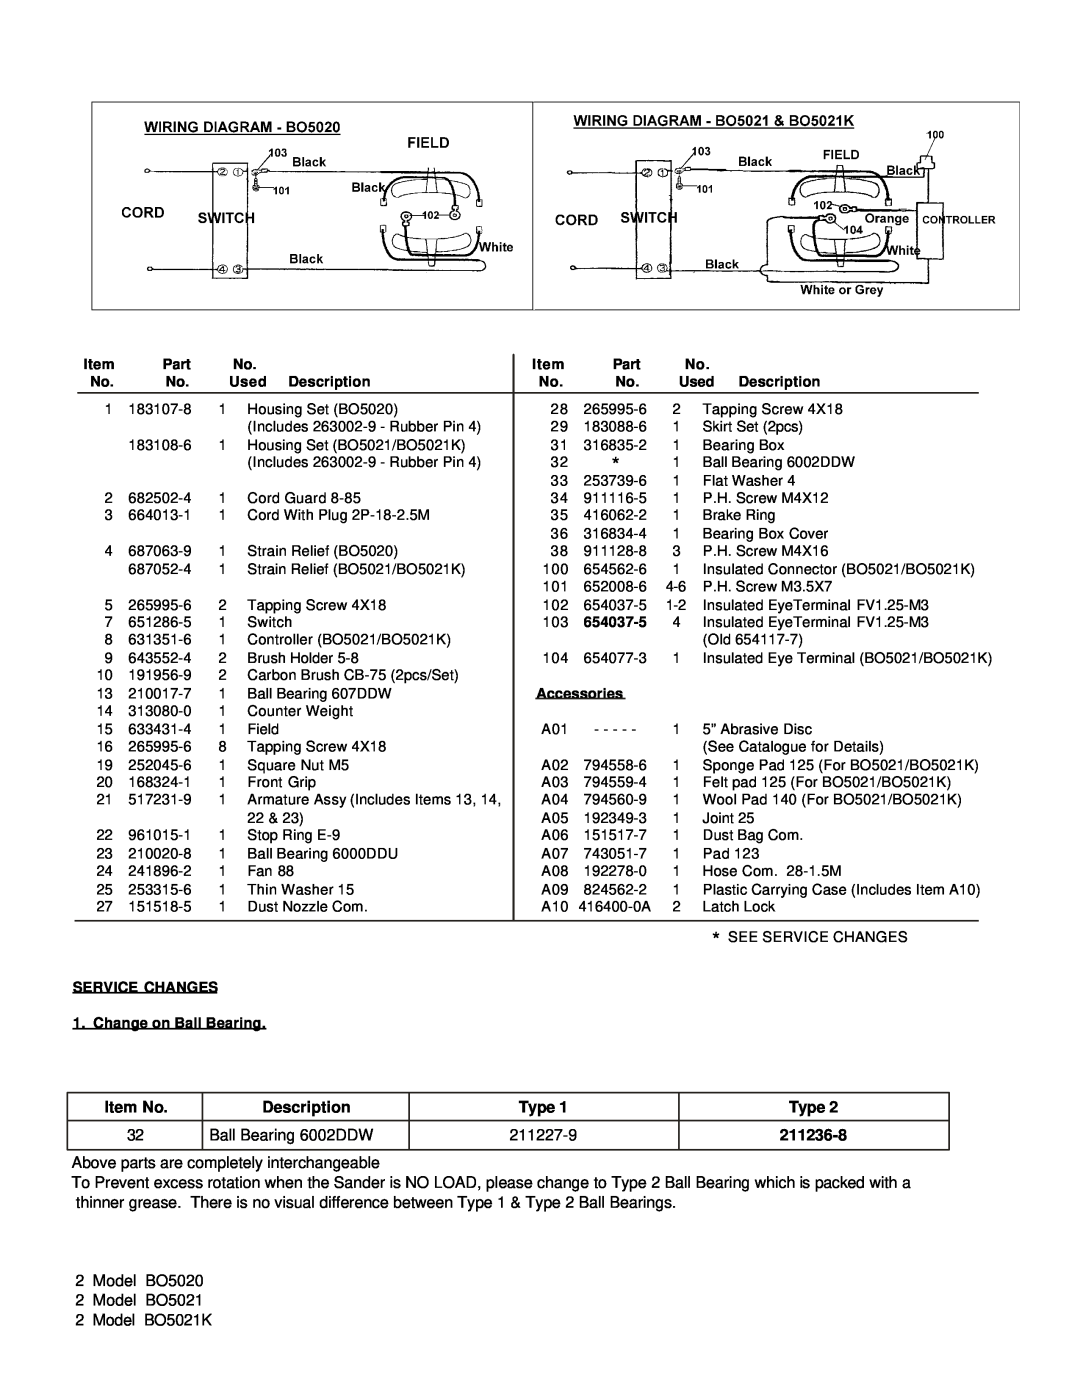 Makita BO5021K manual Item No, Description, Type, Ball Bearing 6002DDW, 211227-9, 211236-8 